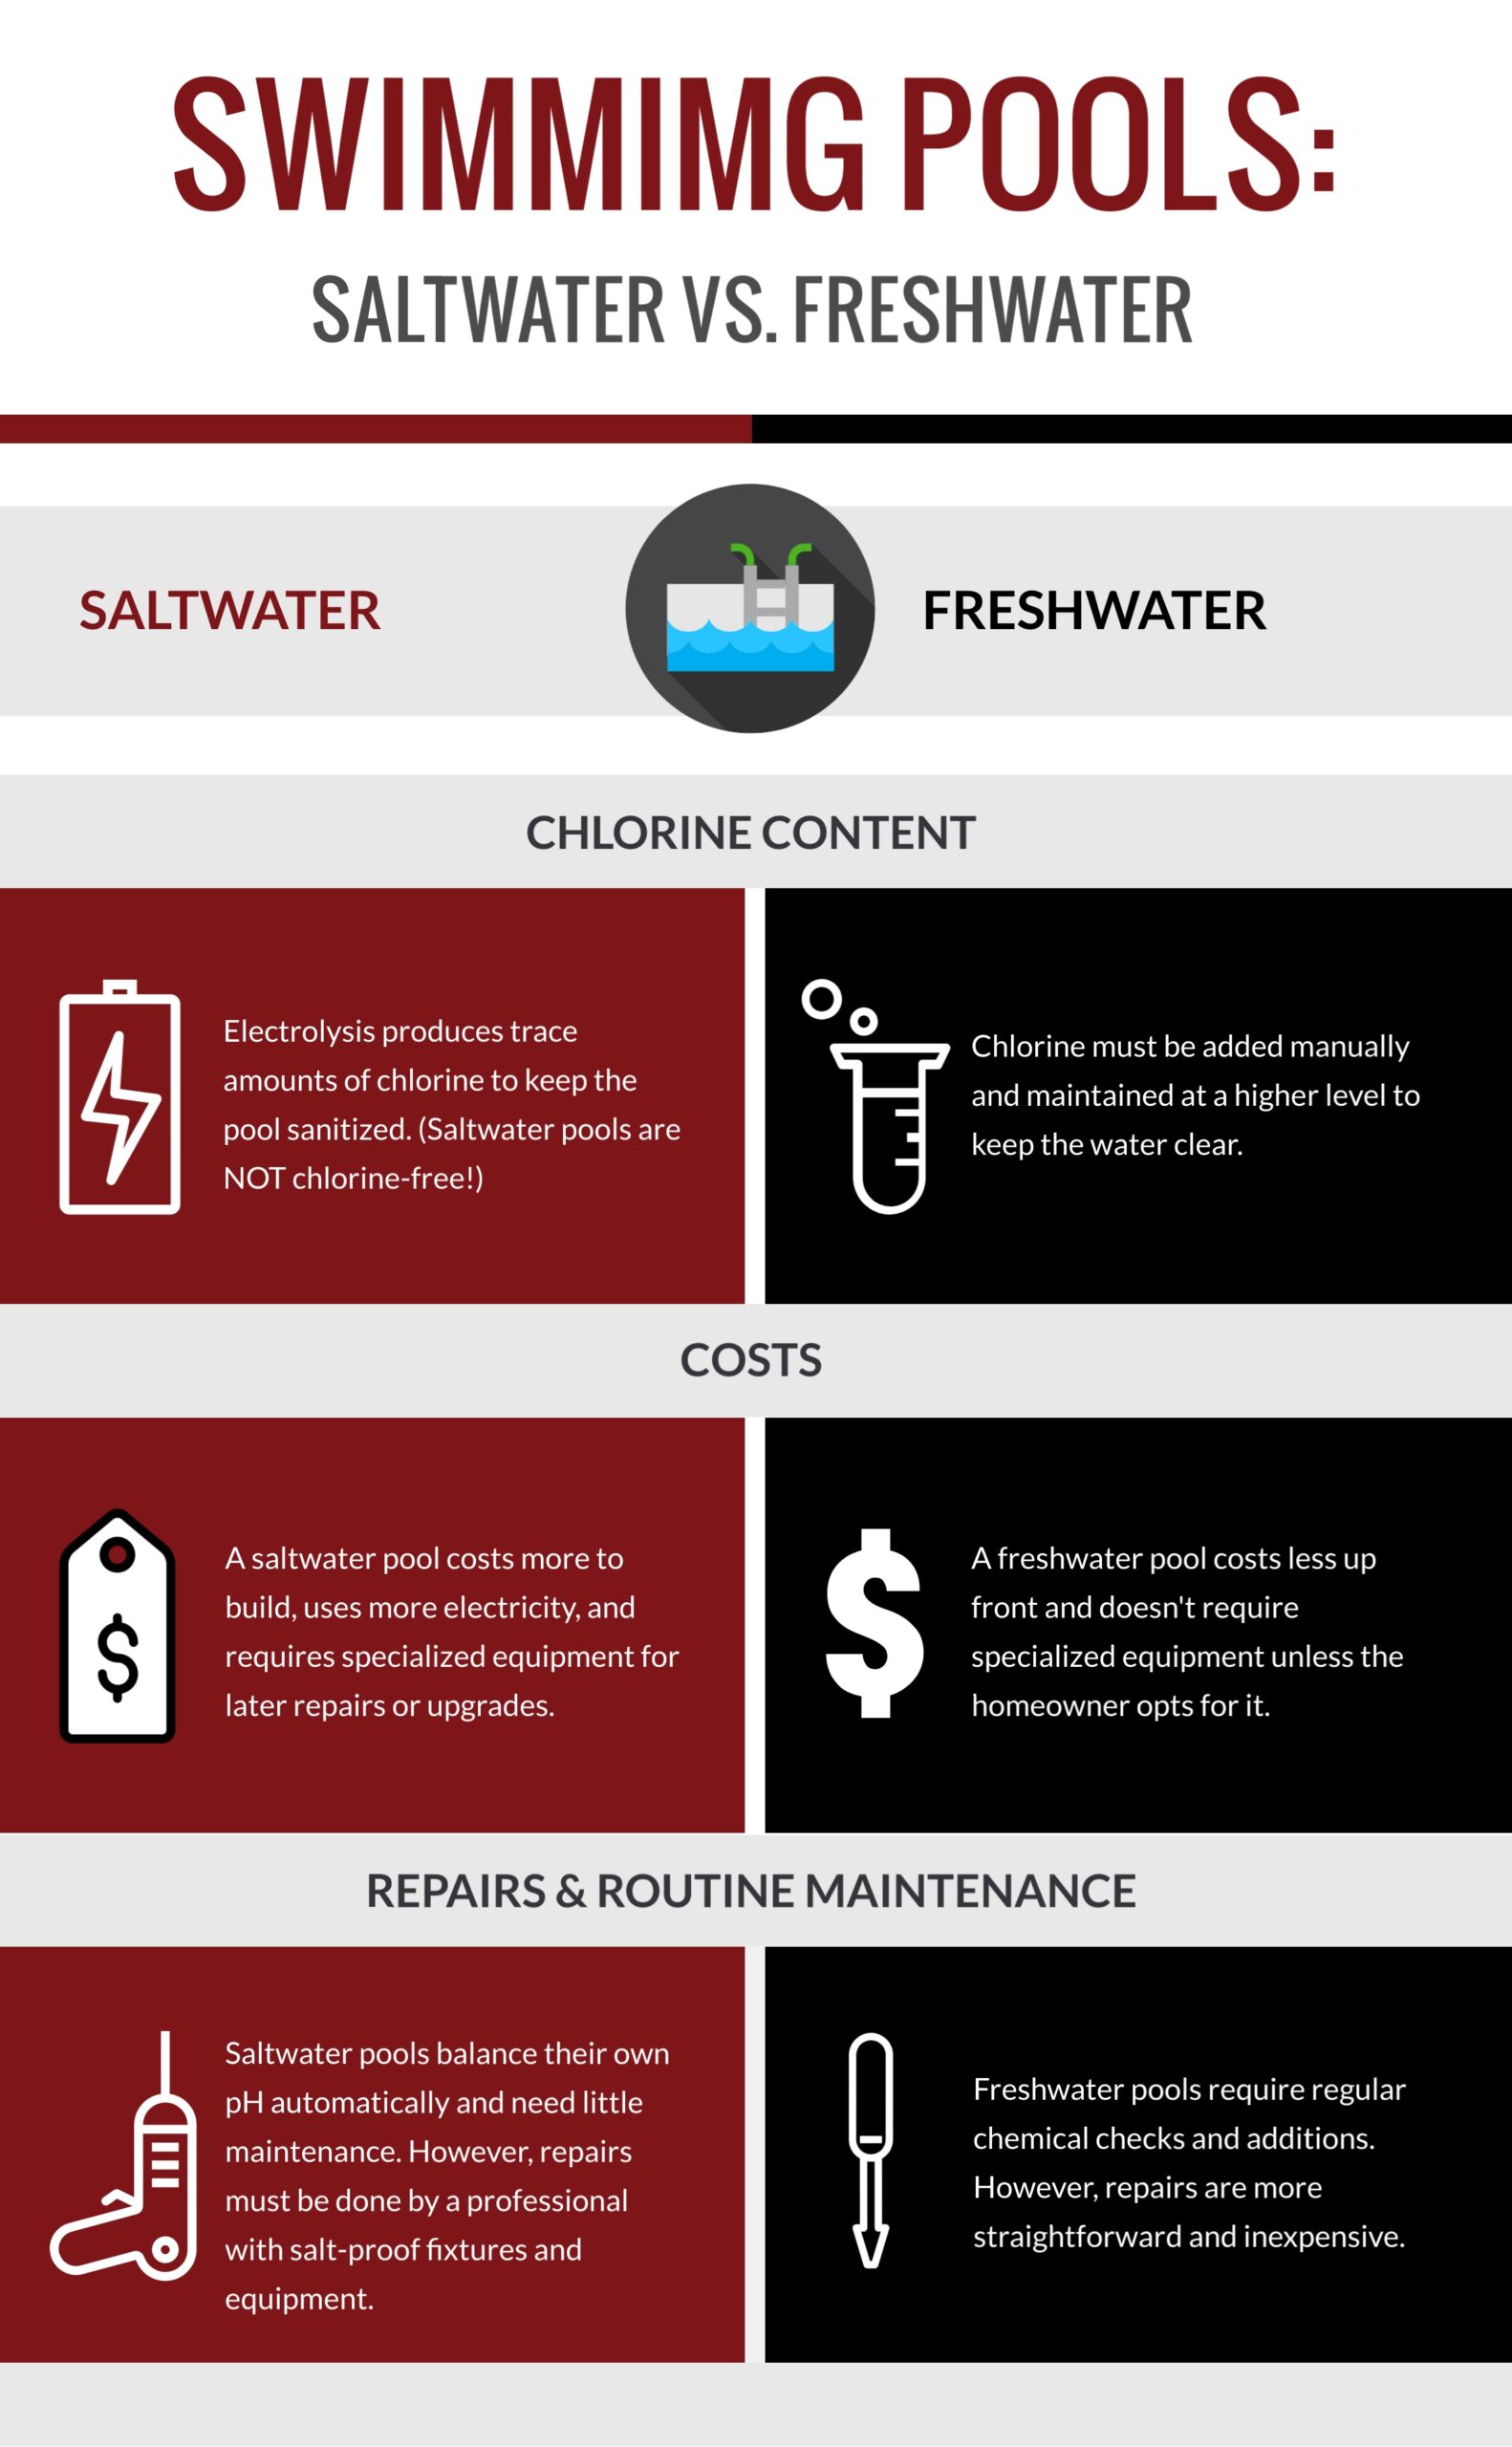 Saltwater vs. Freshwater Pools, Creekstone Outdoor Living, Spring, TX